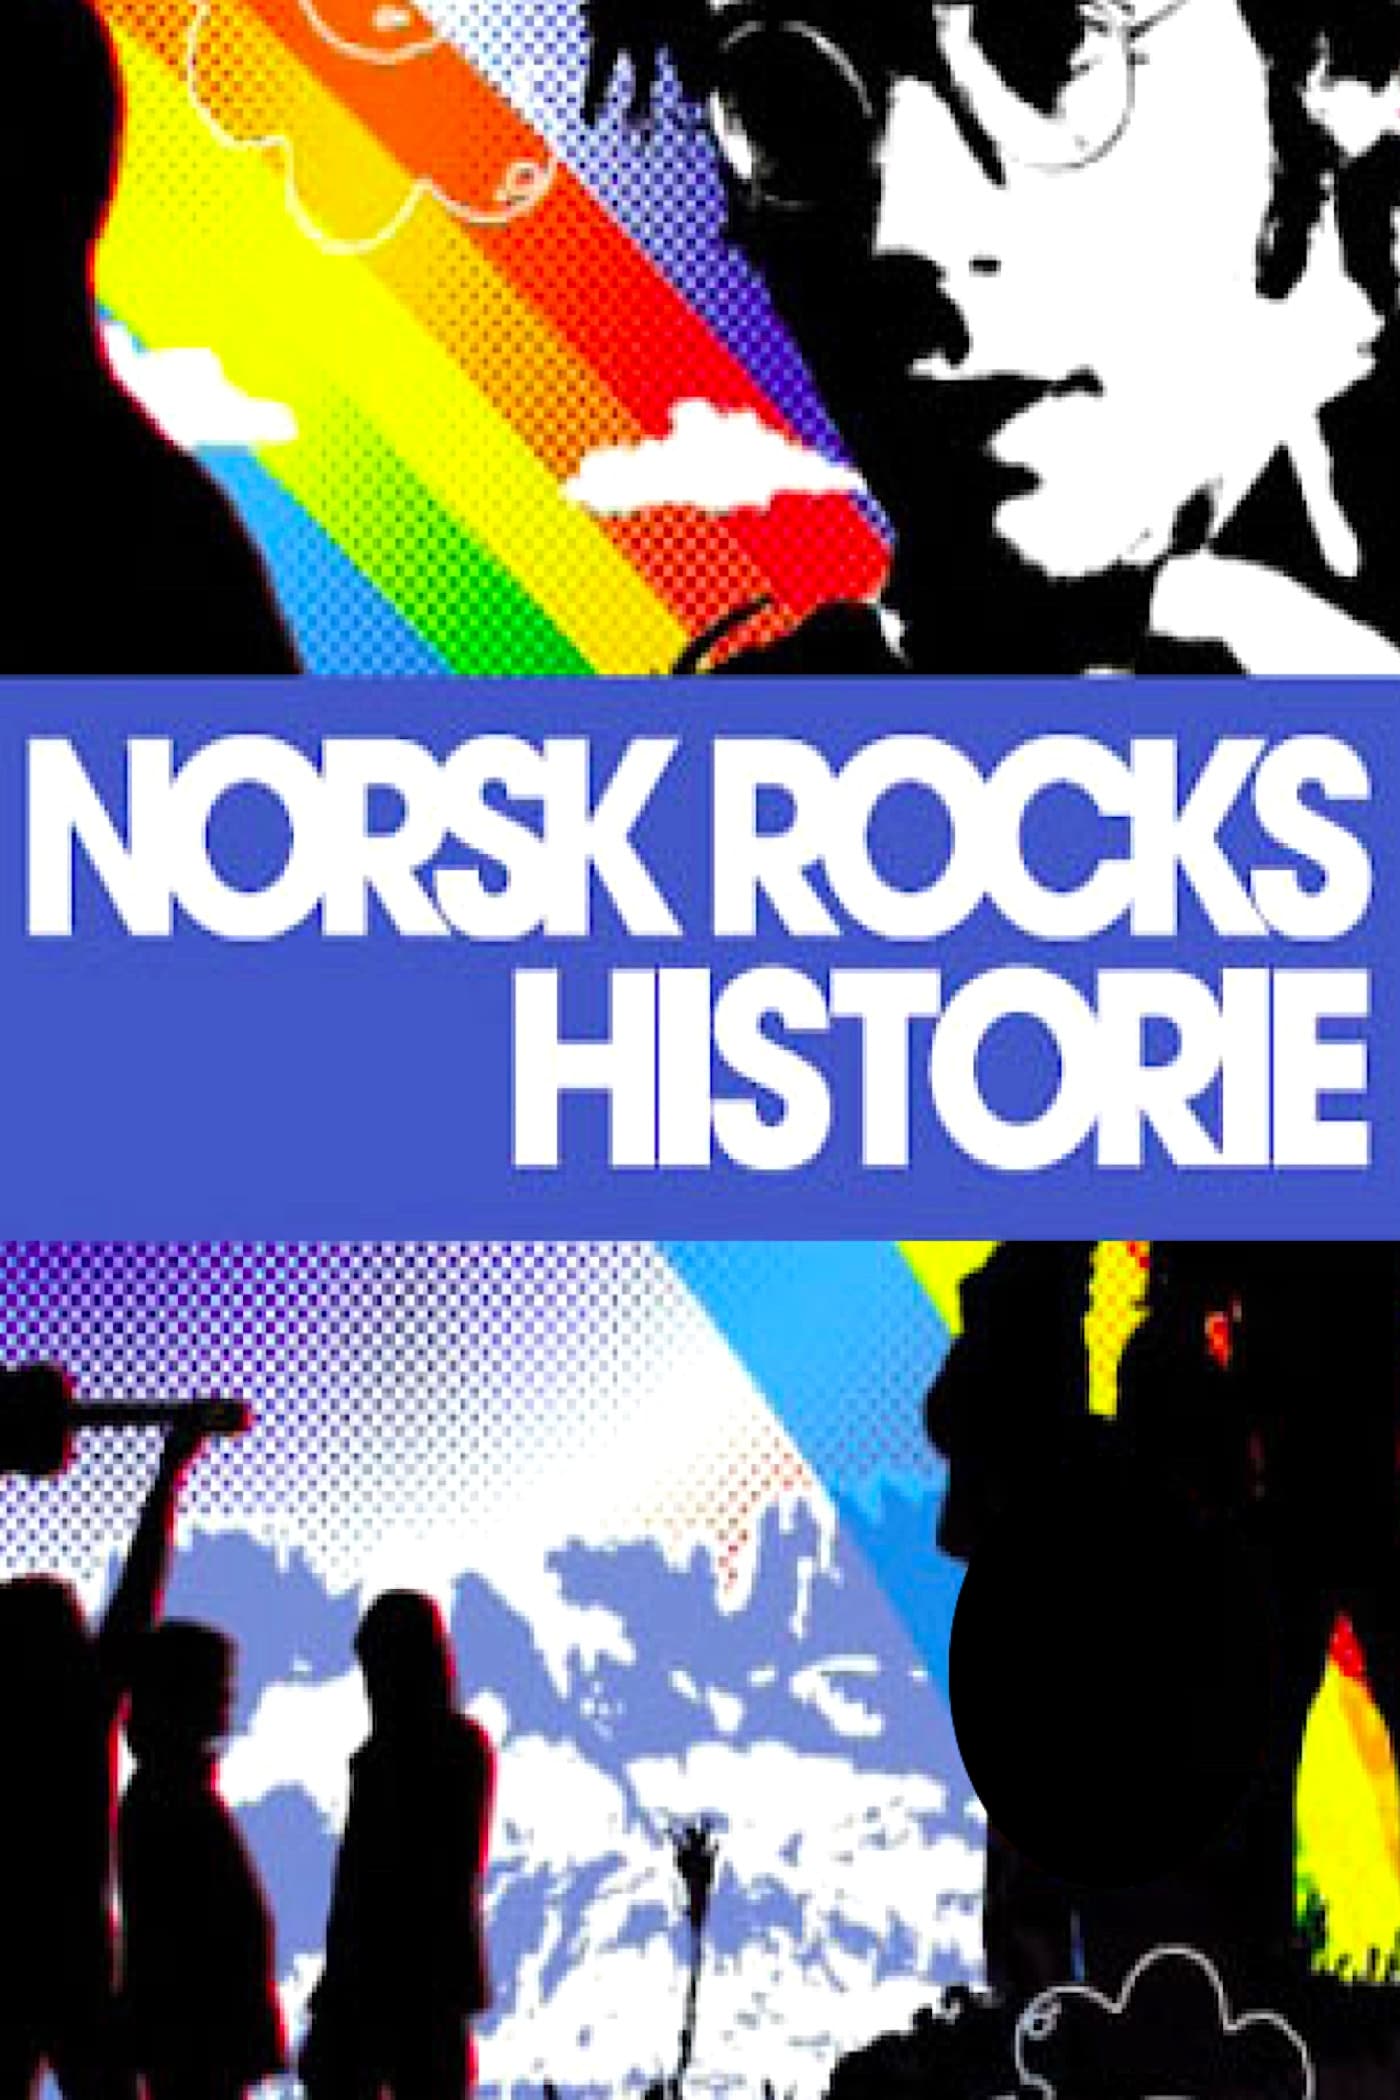 The History of Norwegian Rock Music